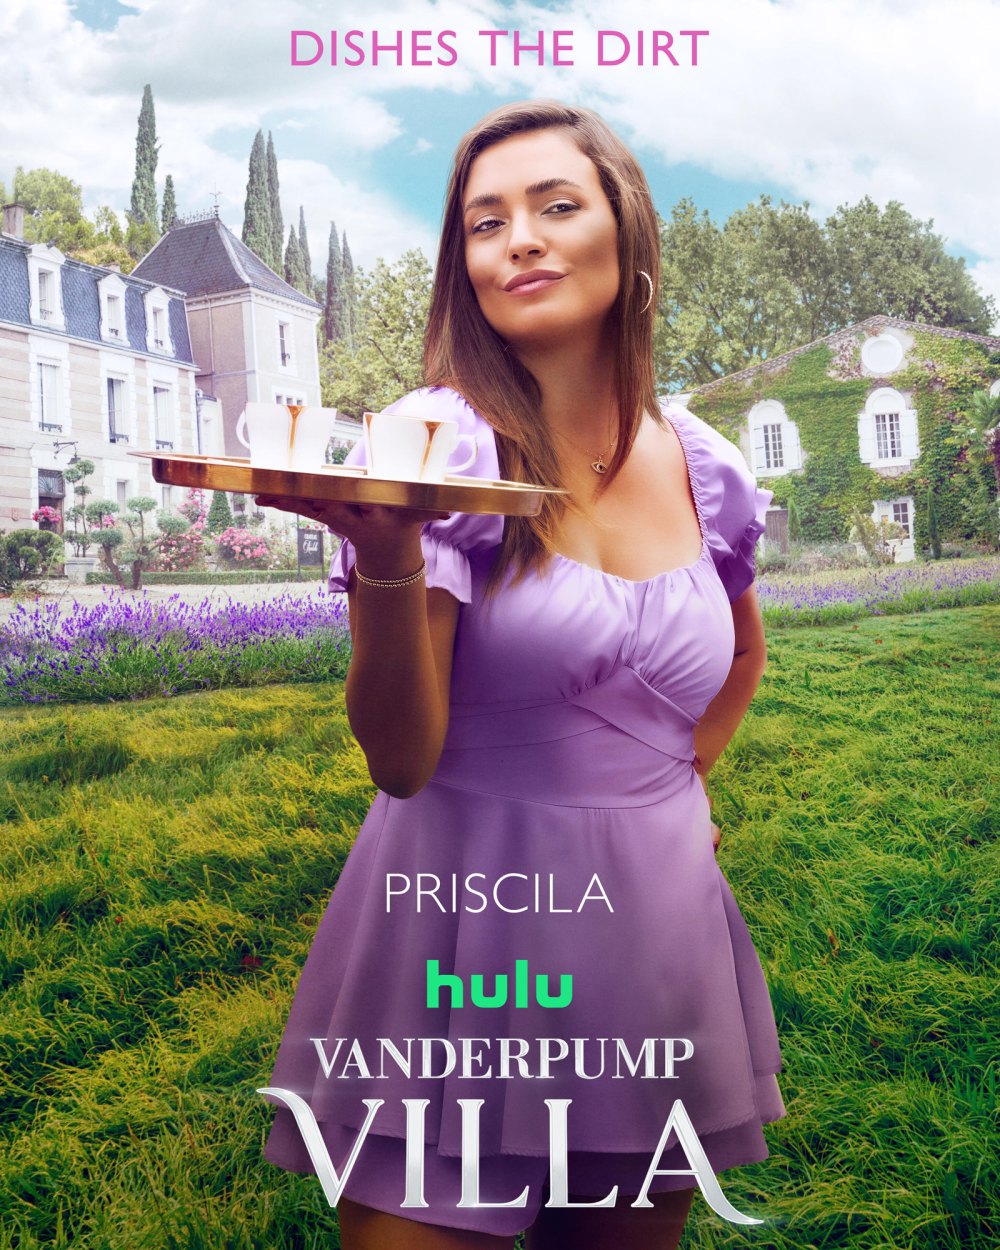 Priscilla Ferrari says Hulu's Vanderpump Mansion didn't show what made her leave